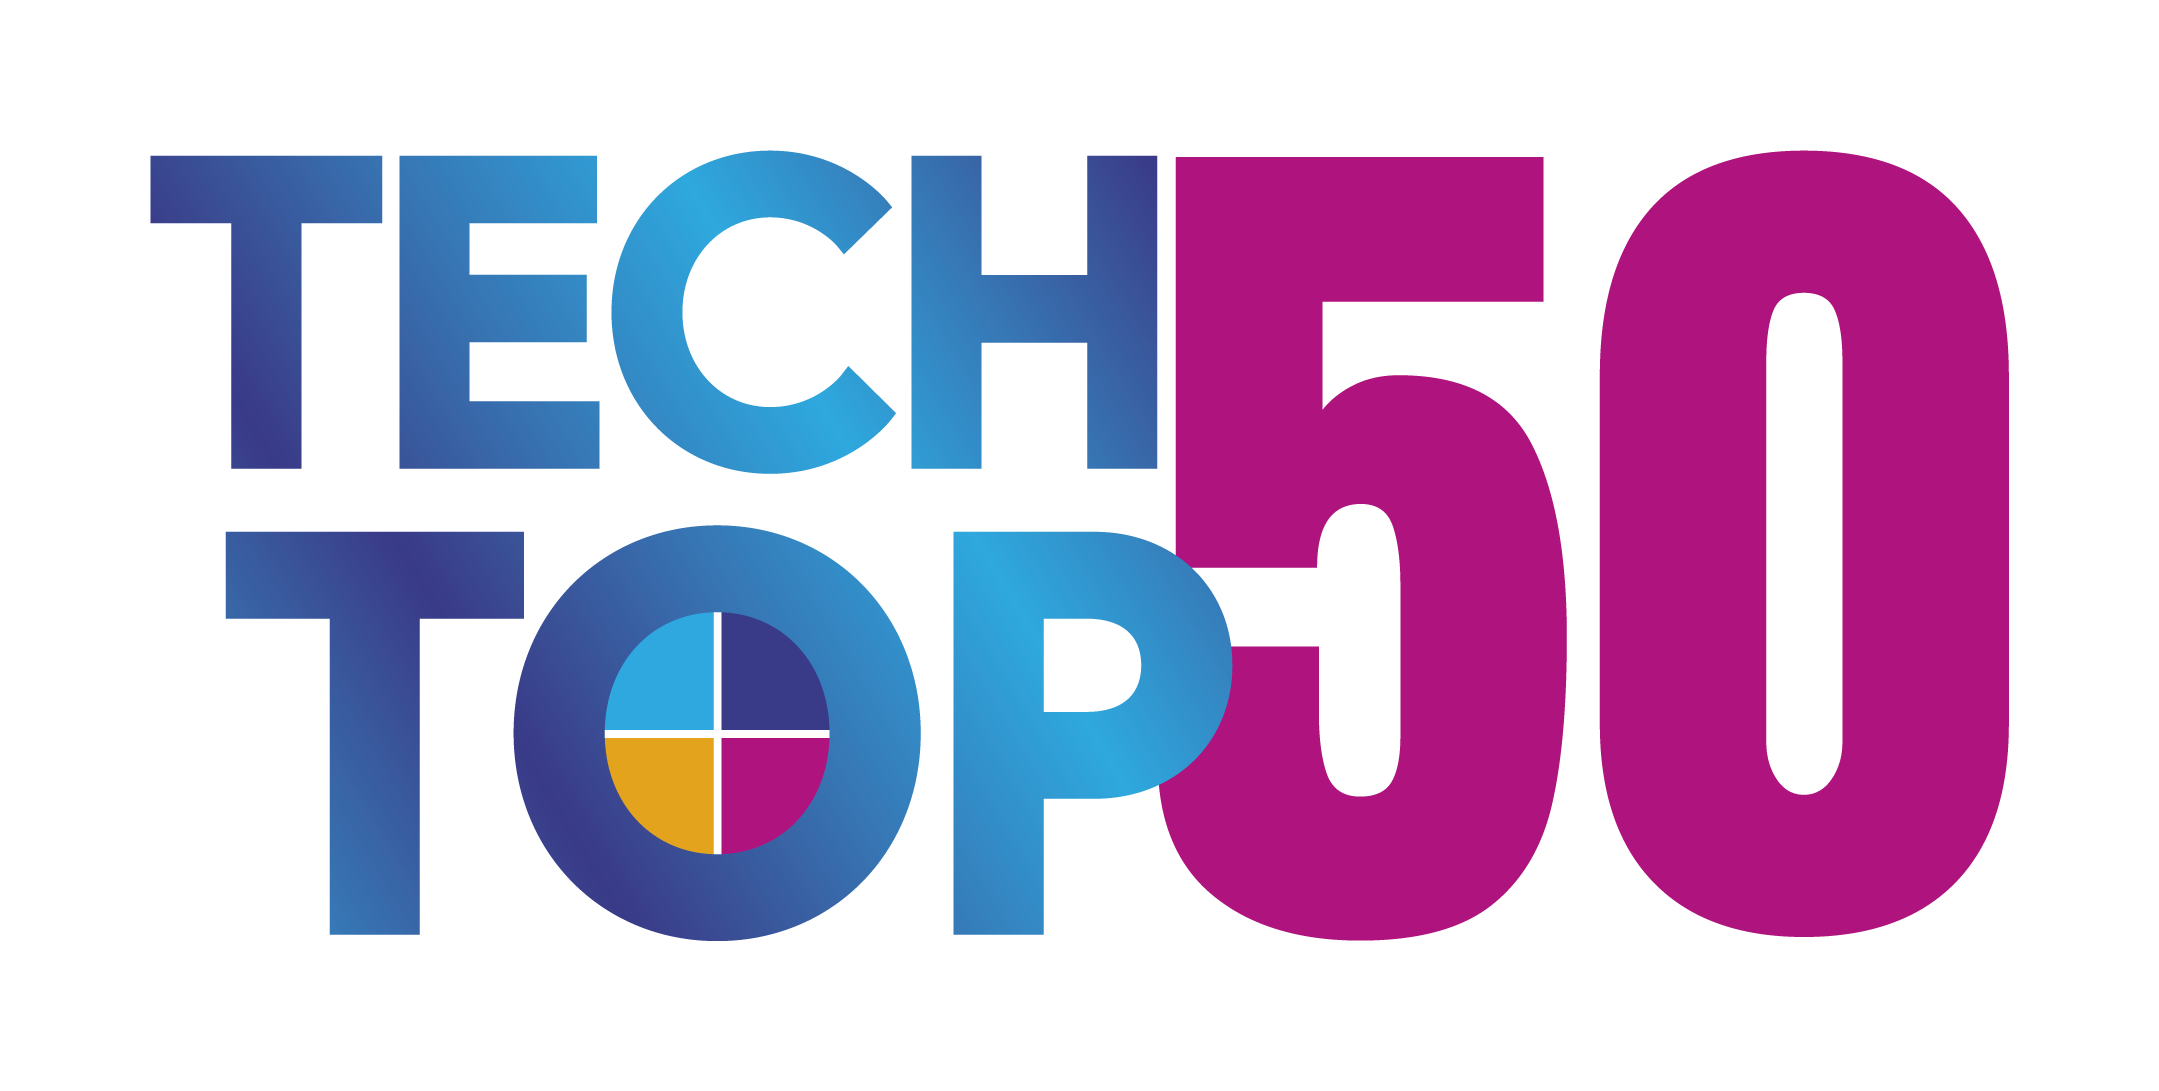 MTLC Tech Top 50 logo